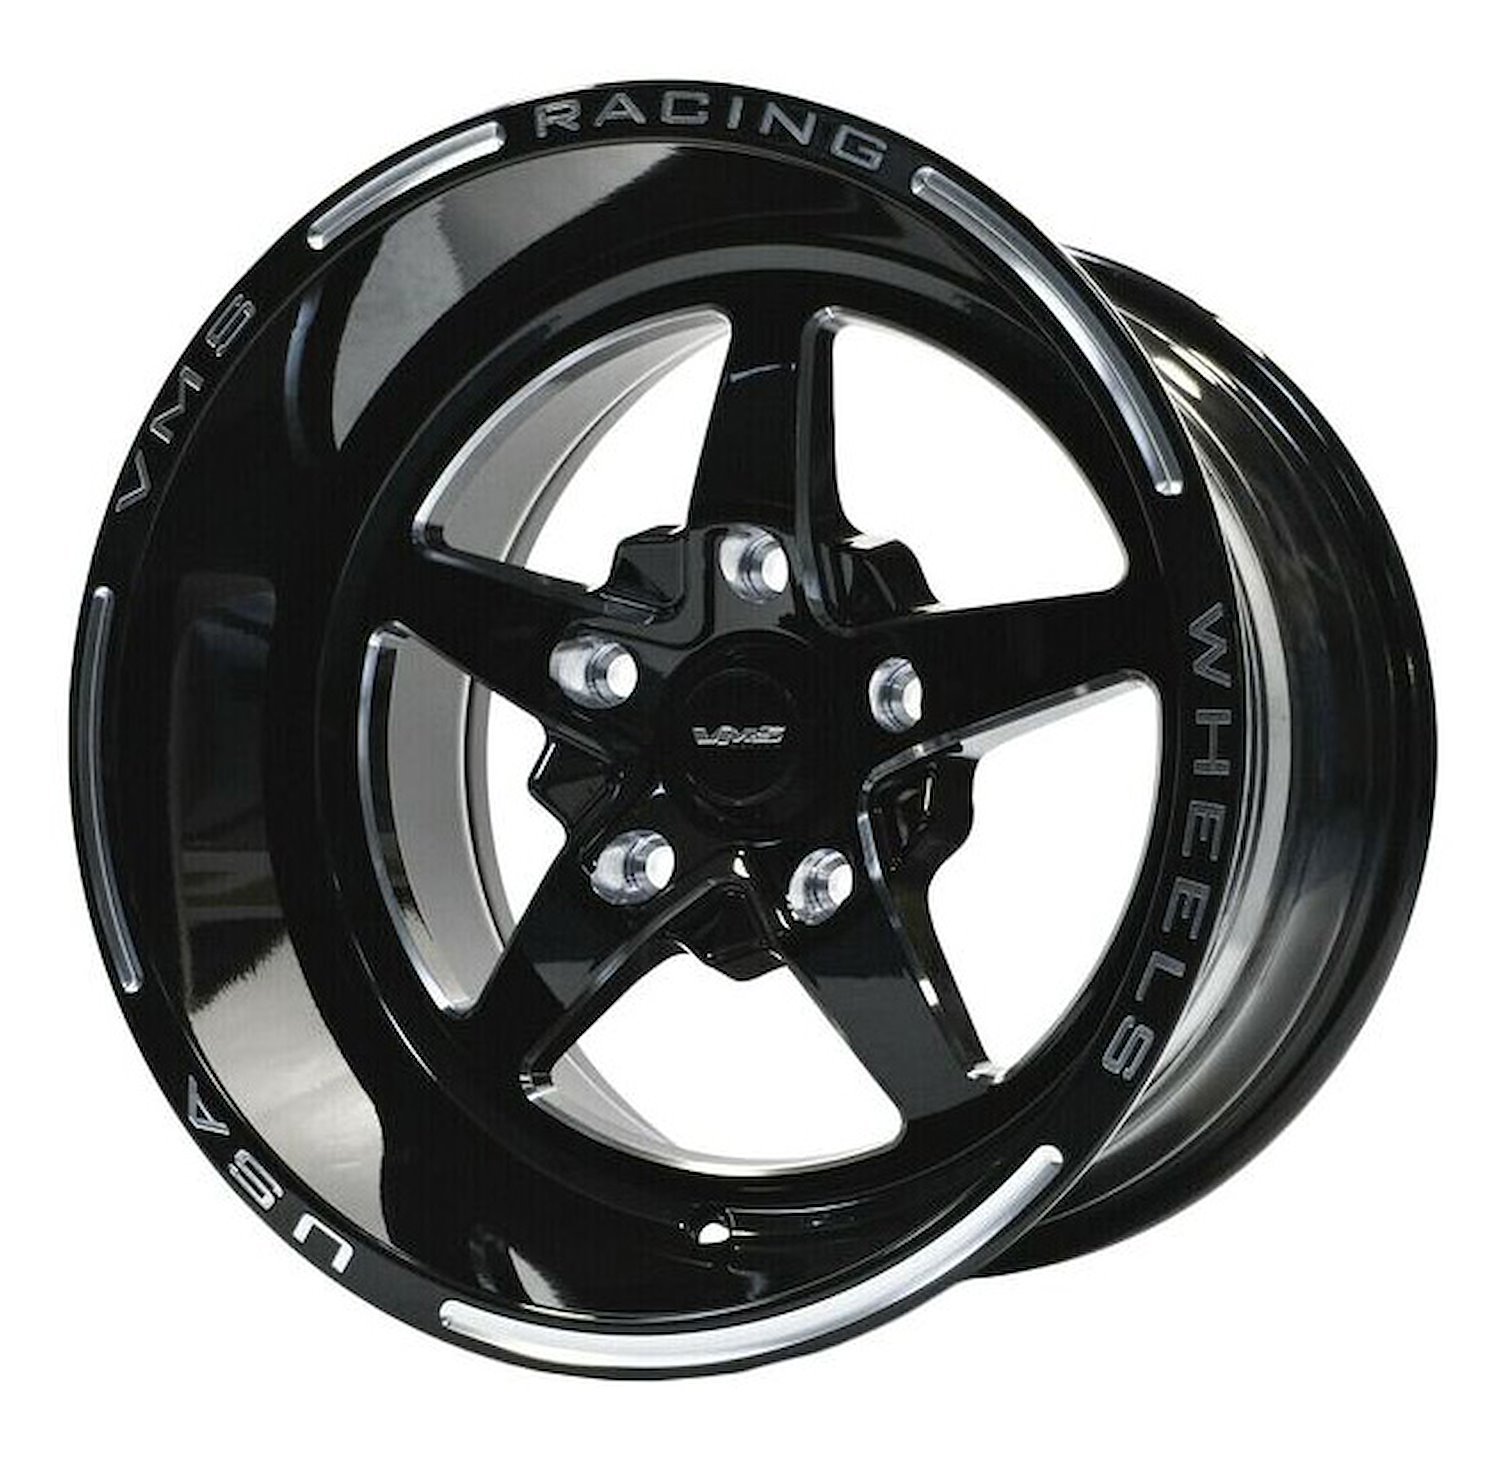 VWST059 V-Star Wheel, Size: 15" x 10", Bolt Pattern: 5 x 4 1/2" (114.3 mm) [Finish: Gloss Black Milled]